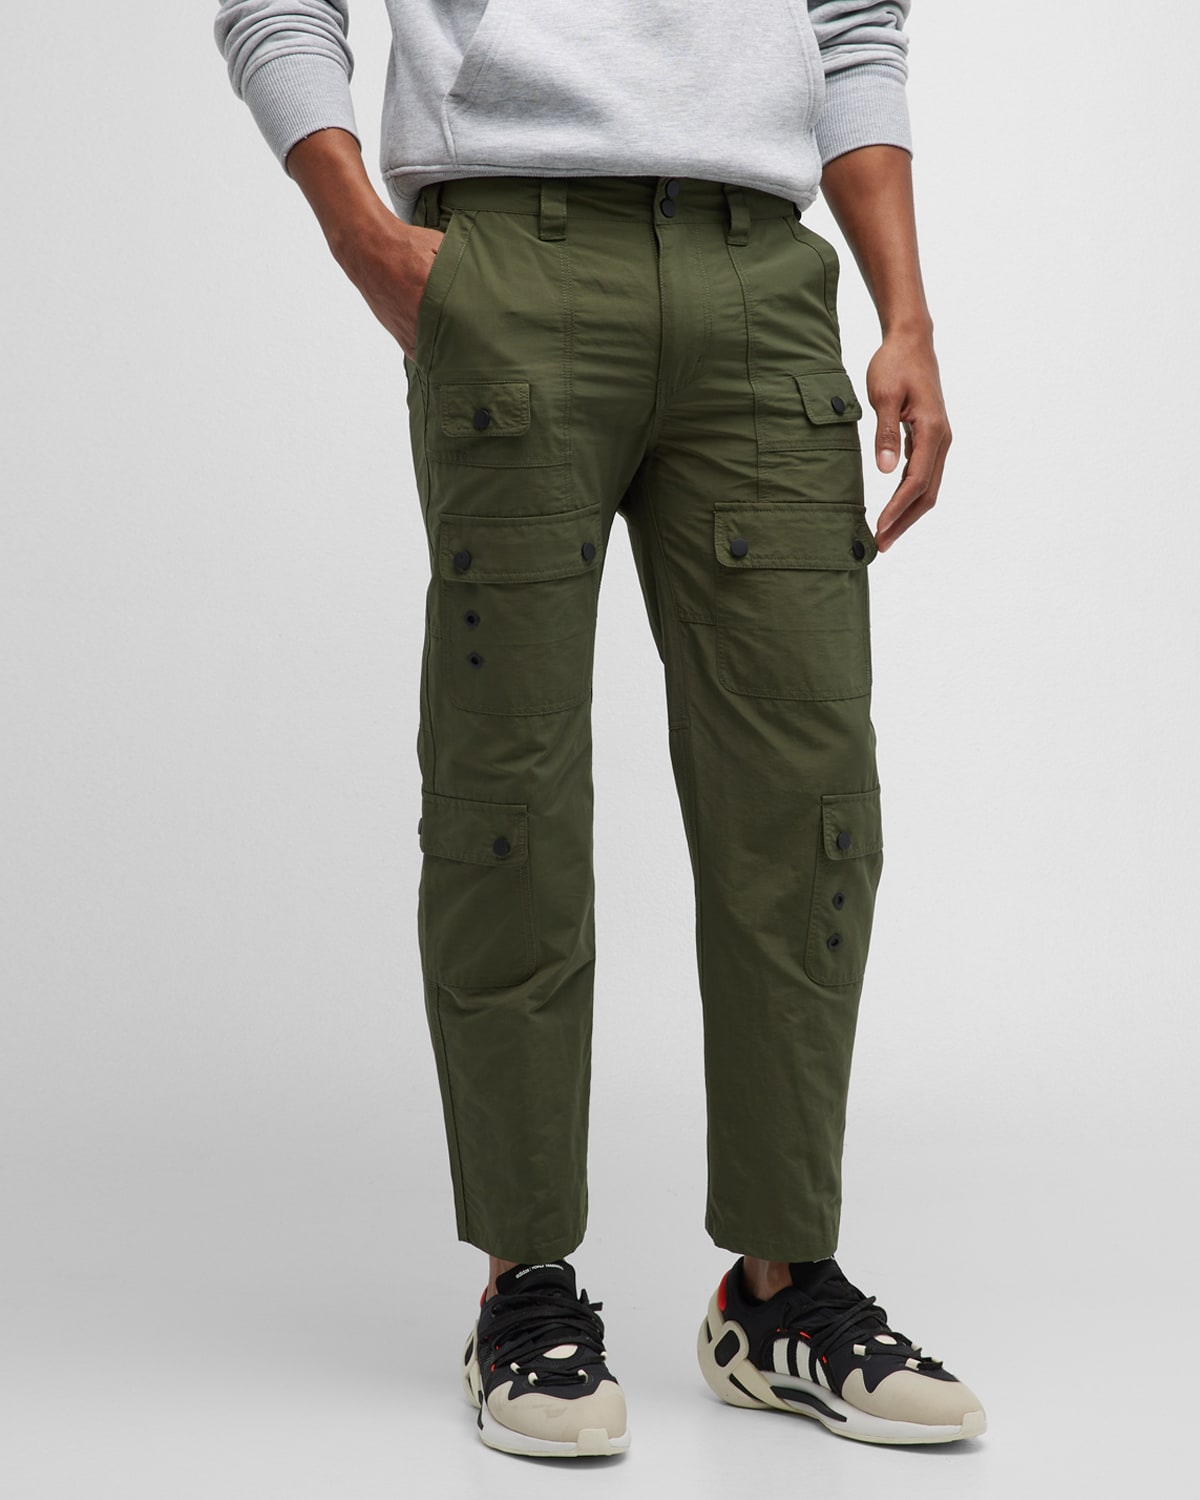 Men's Multi-Pocket Cargo Pants